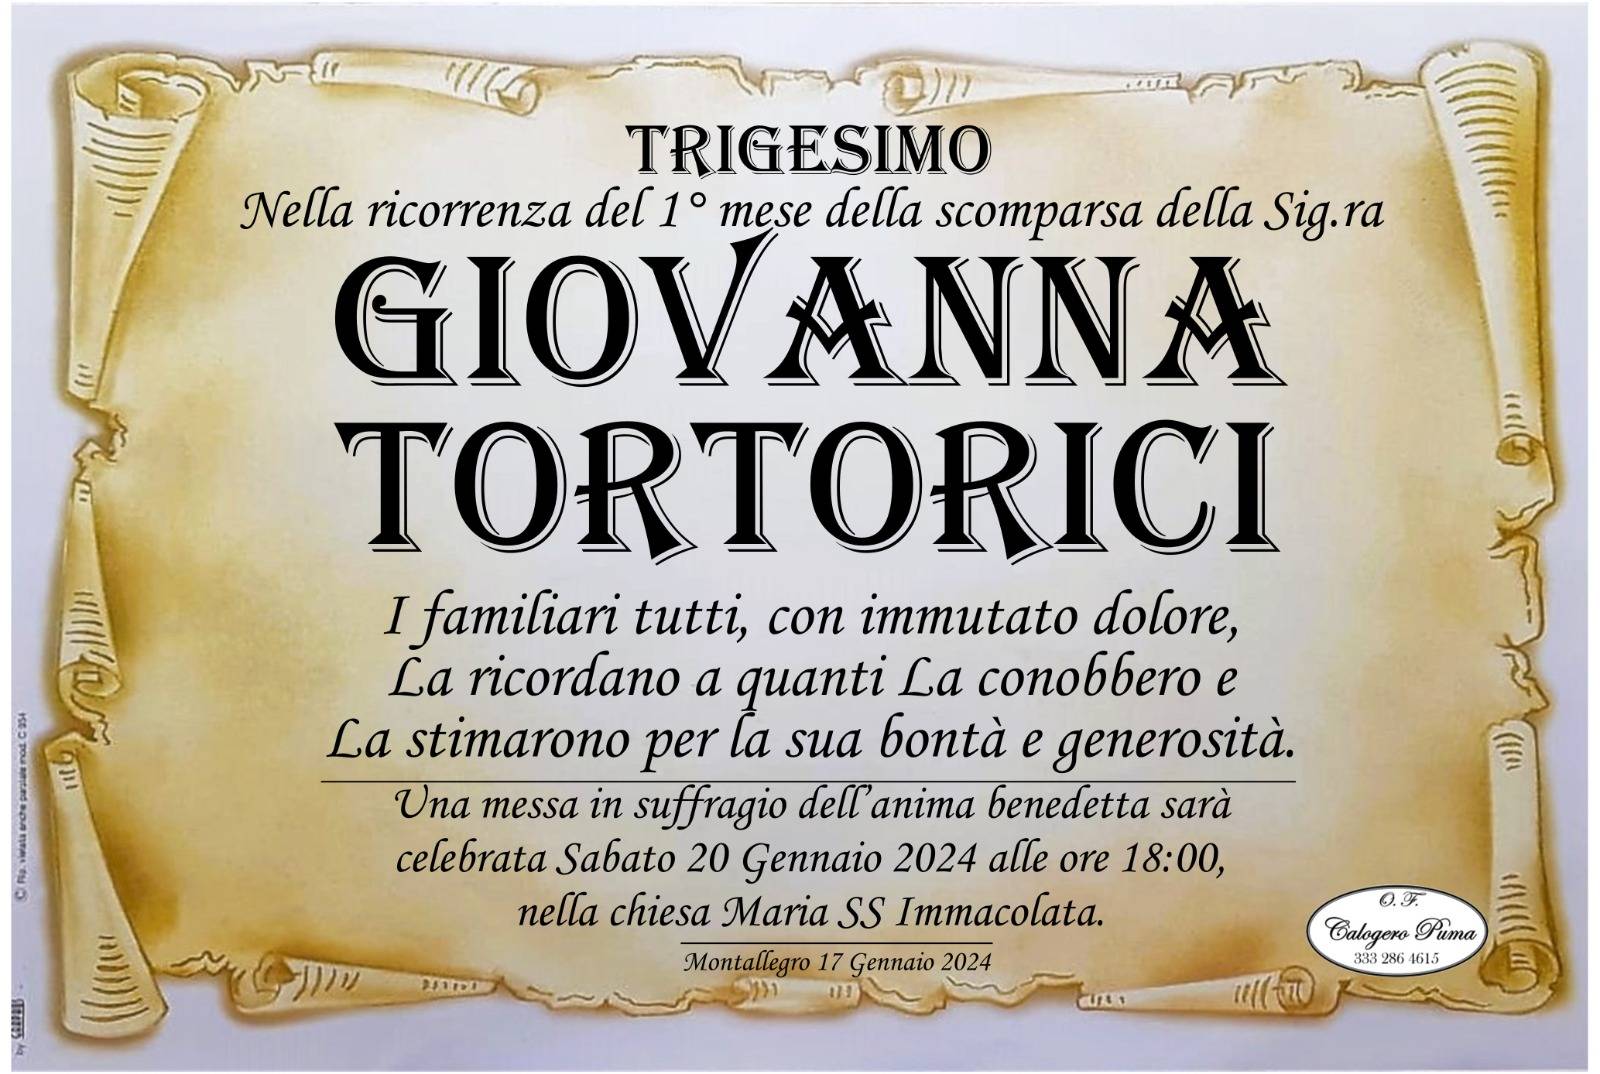 Giovanna Tortorici